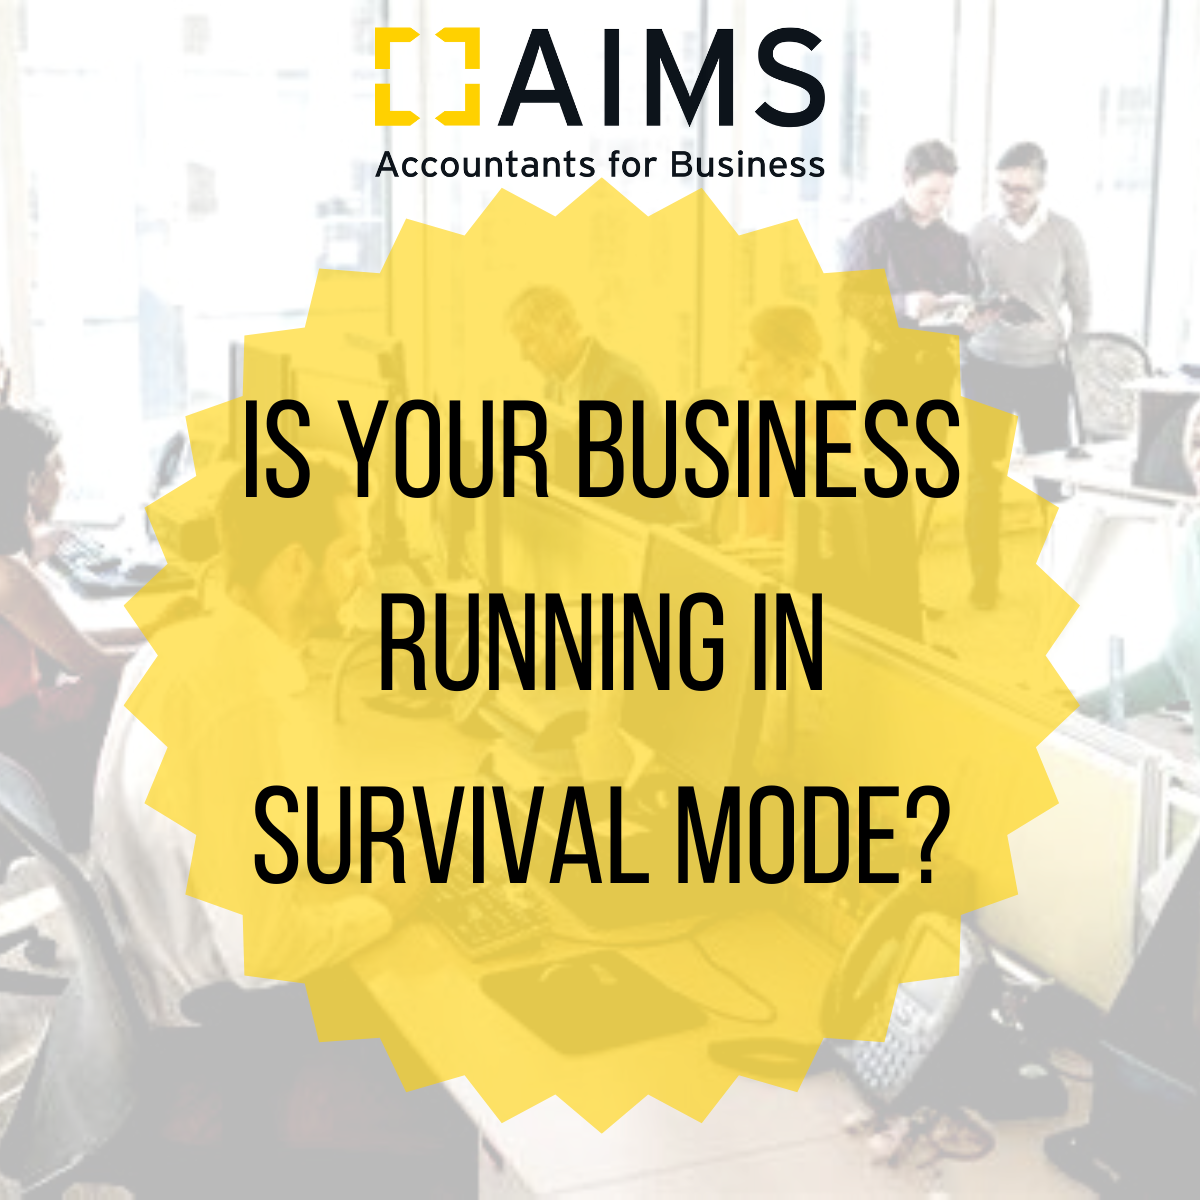 Business survival mode title image